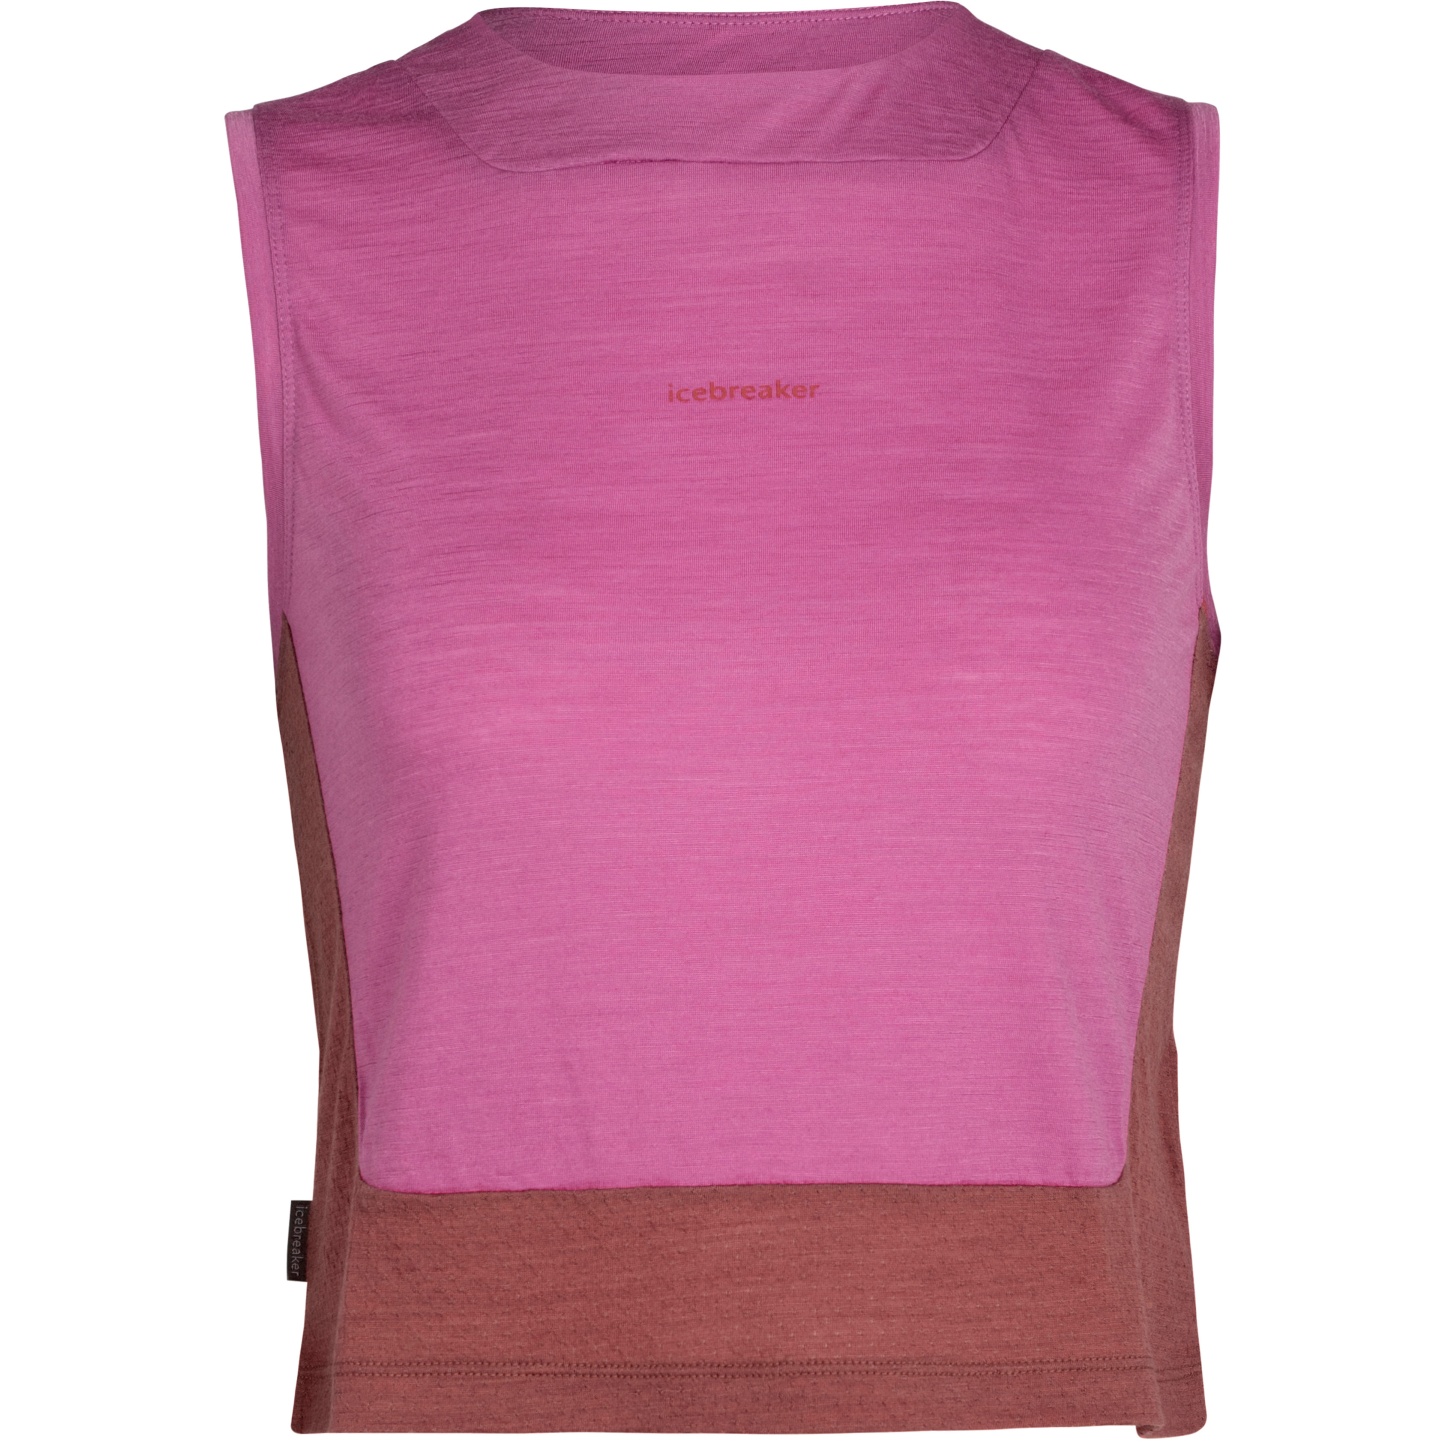 On T-Shirt Sport Femme - Active-T Breathe - Lilac - BIKE24